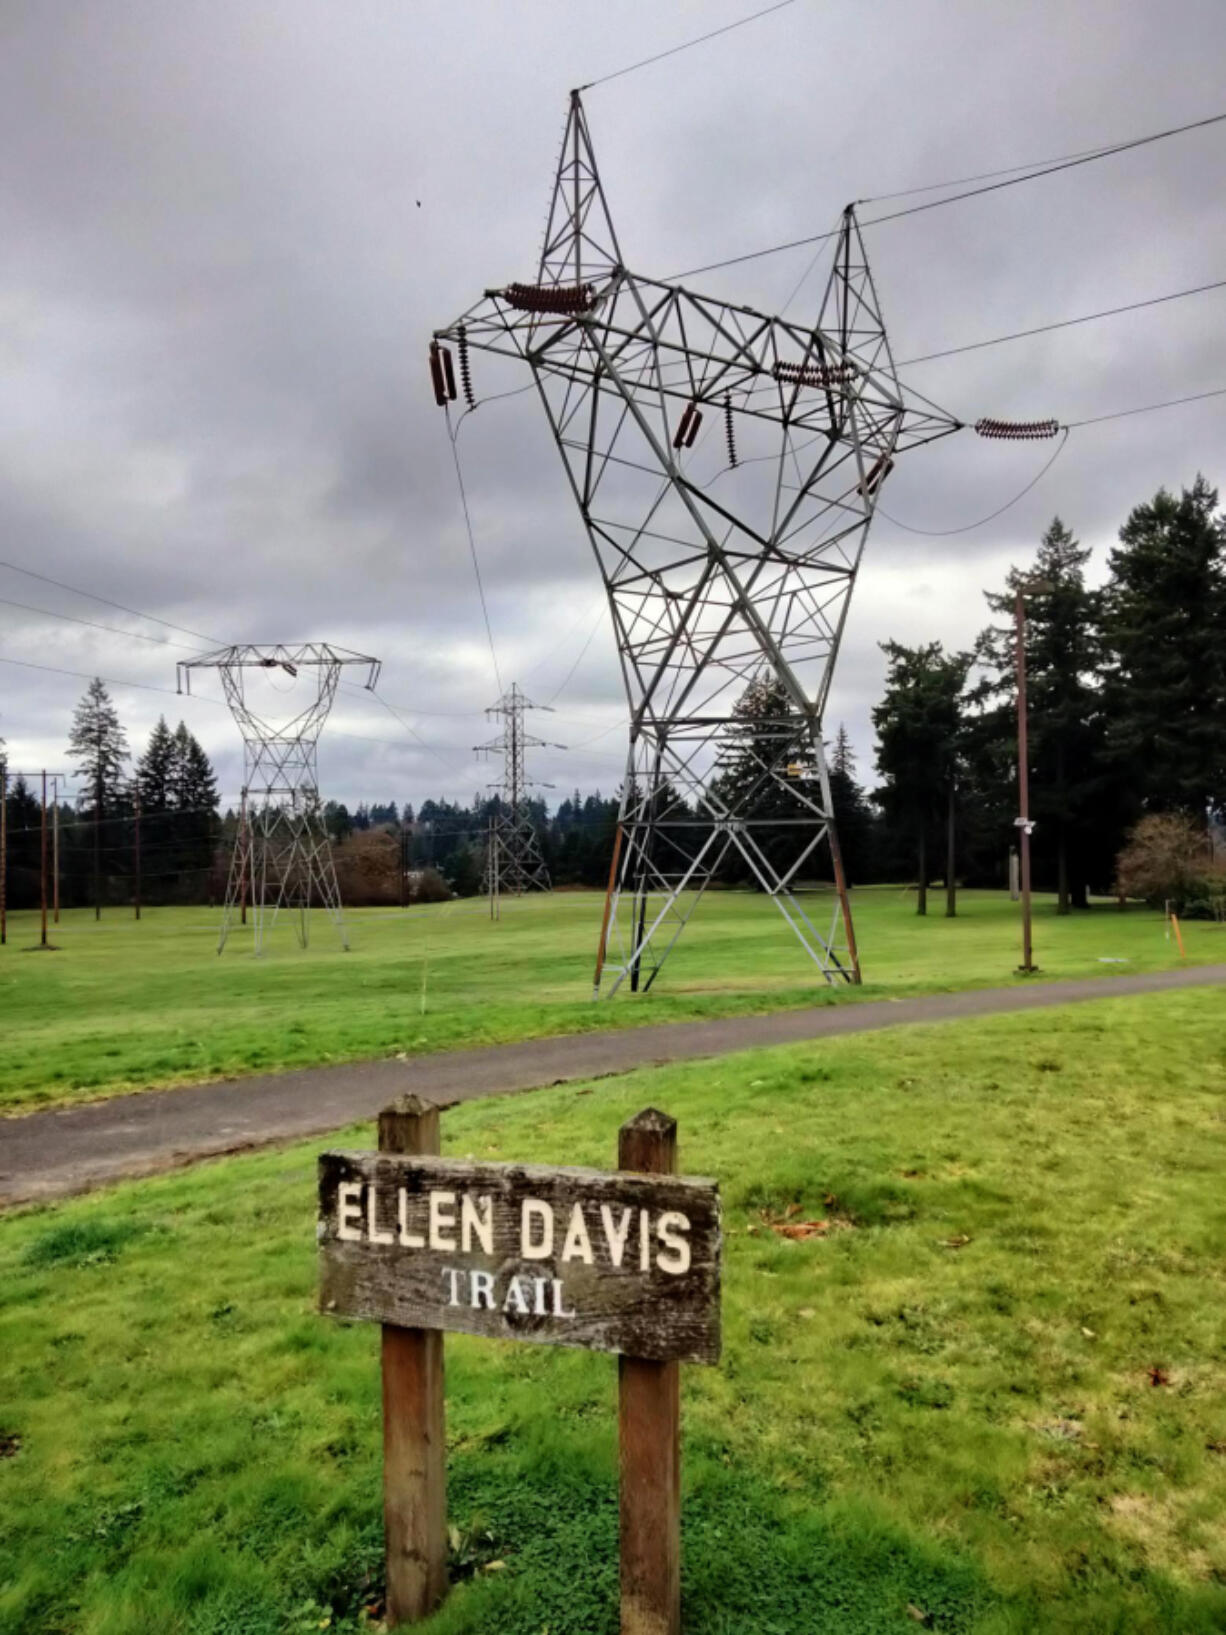 The Ellen Davis Trail crosses the grassy lawns of the Bonneville Power Administration's Ross Complex.